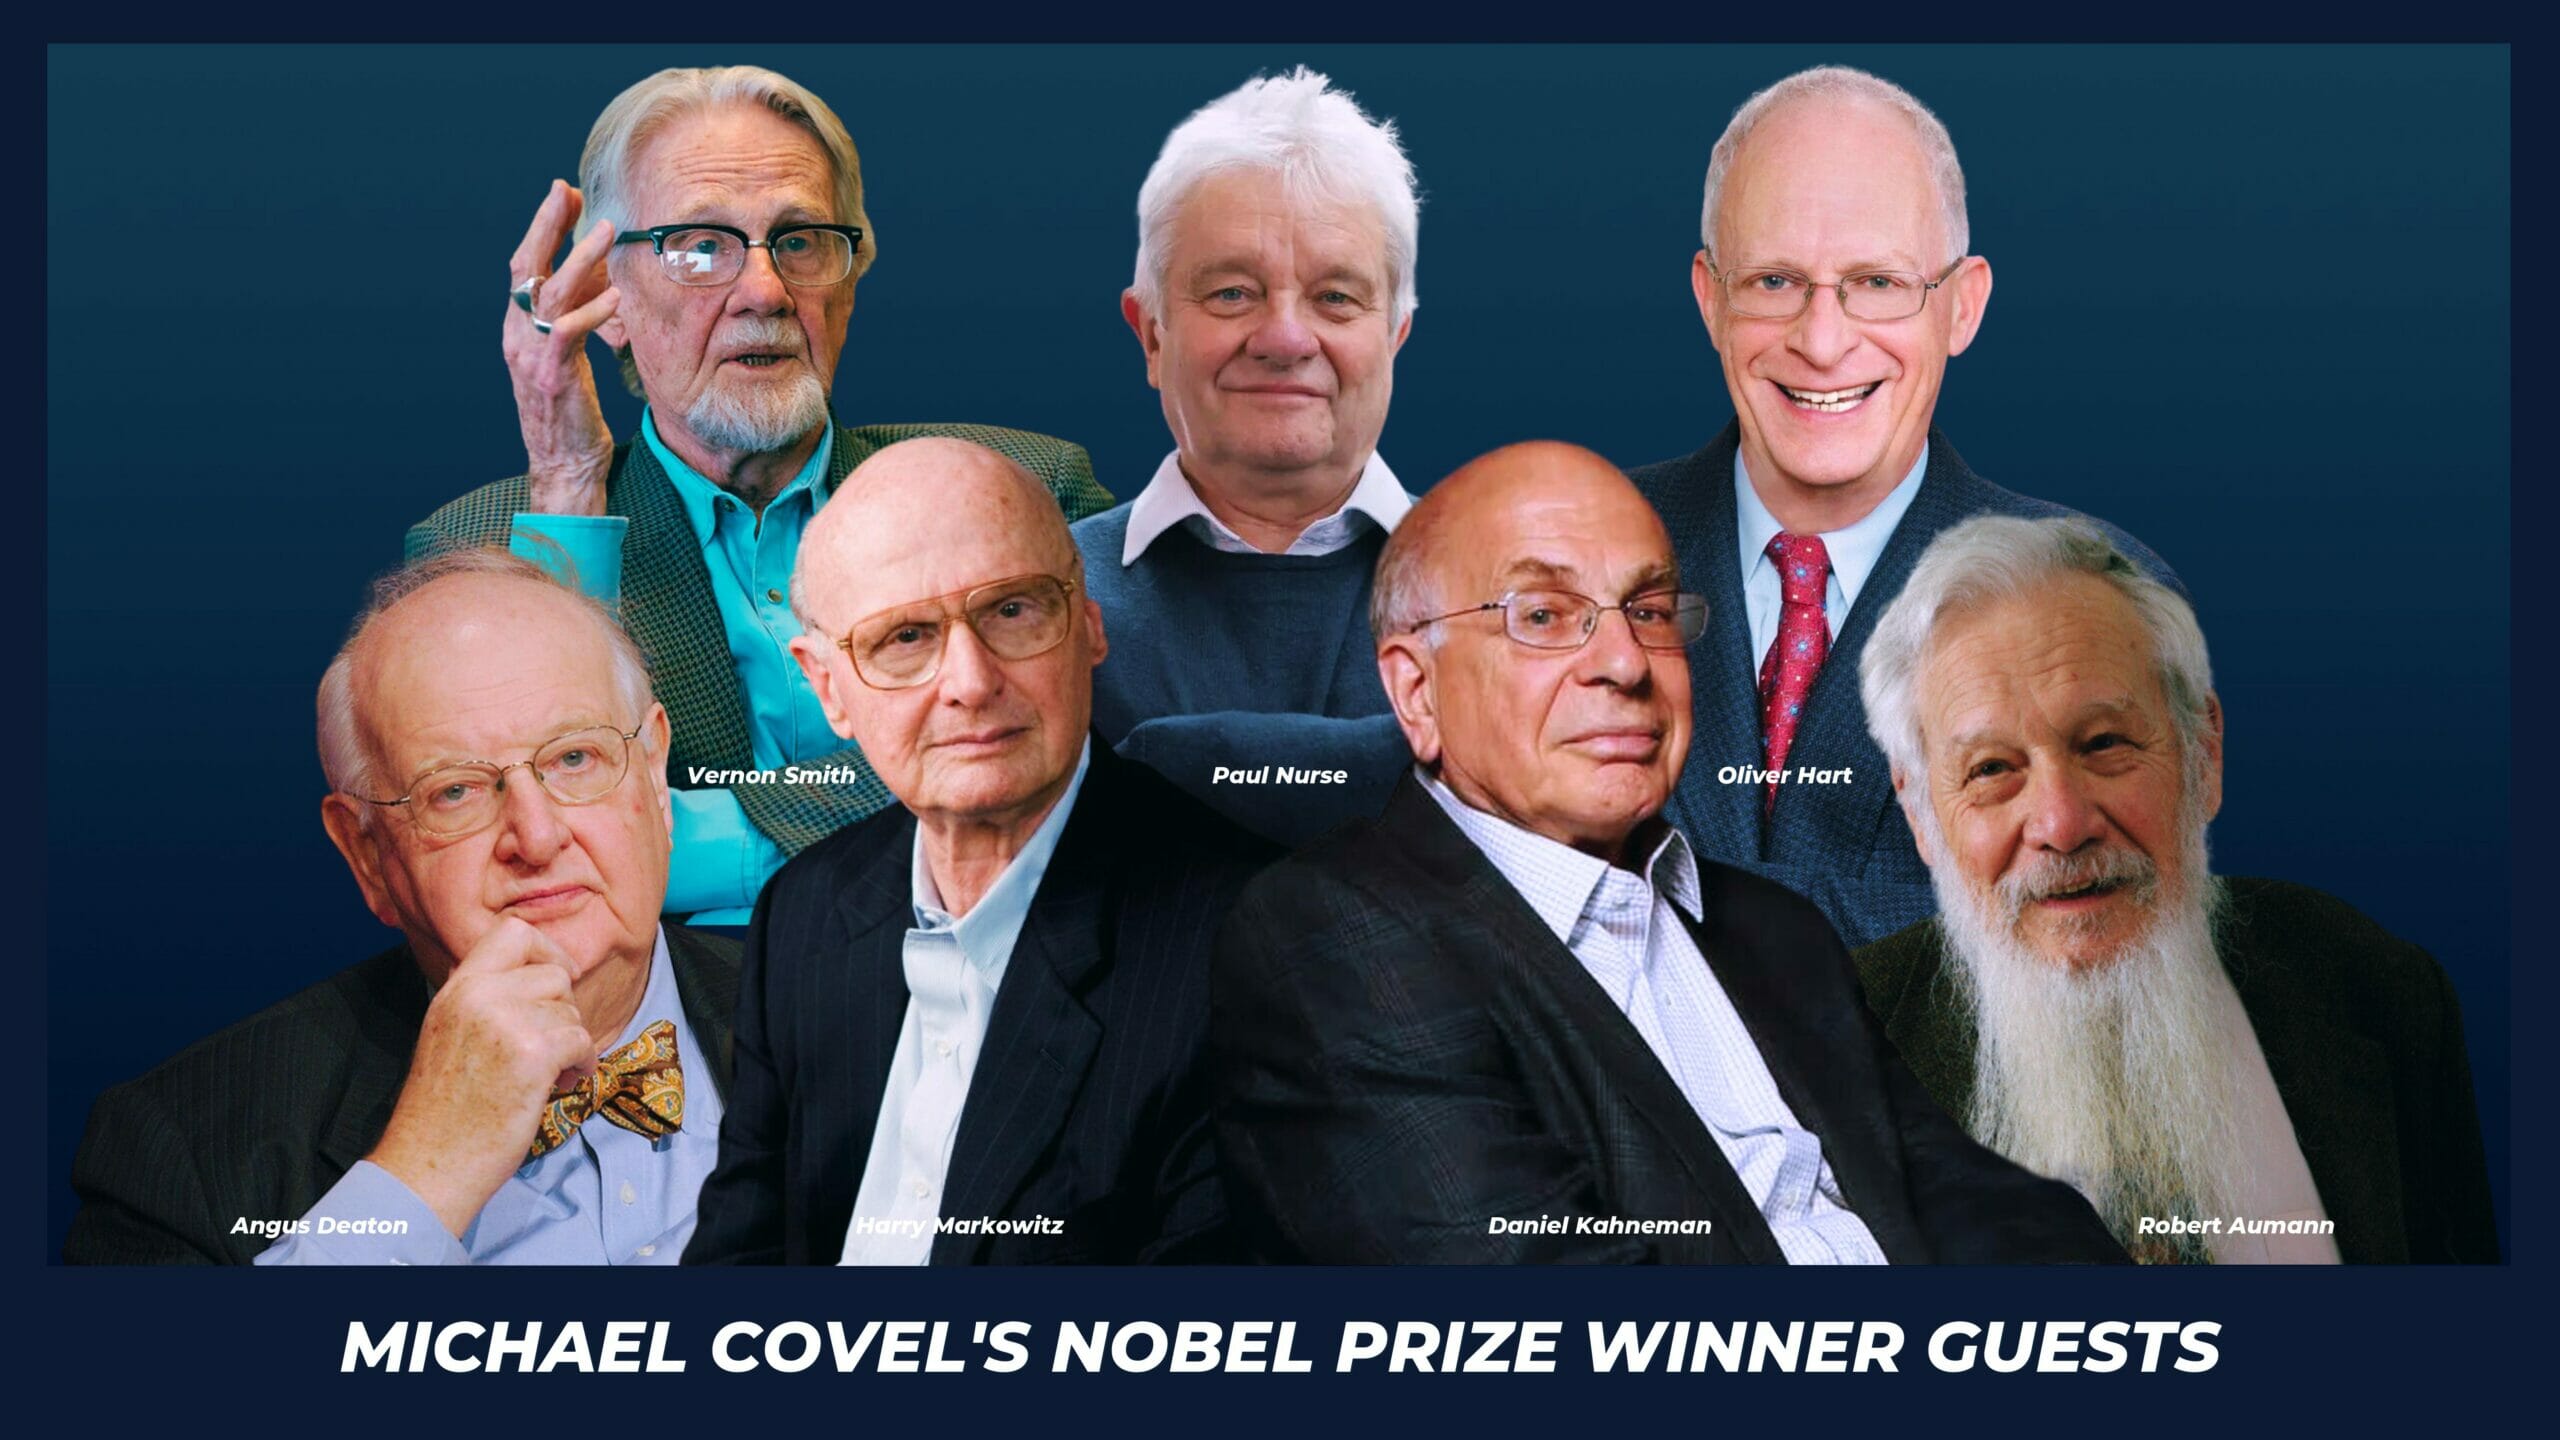 Michael Covel's Nobel Prize Winner Guests